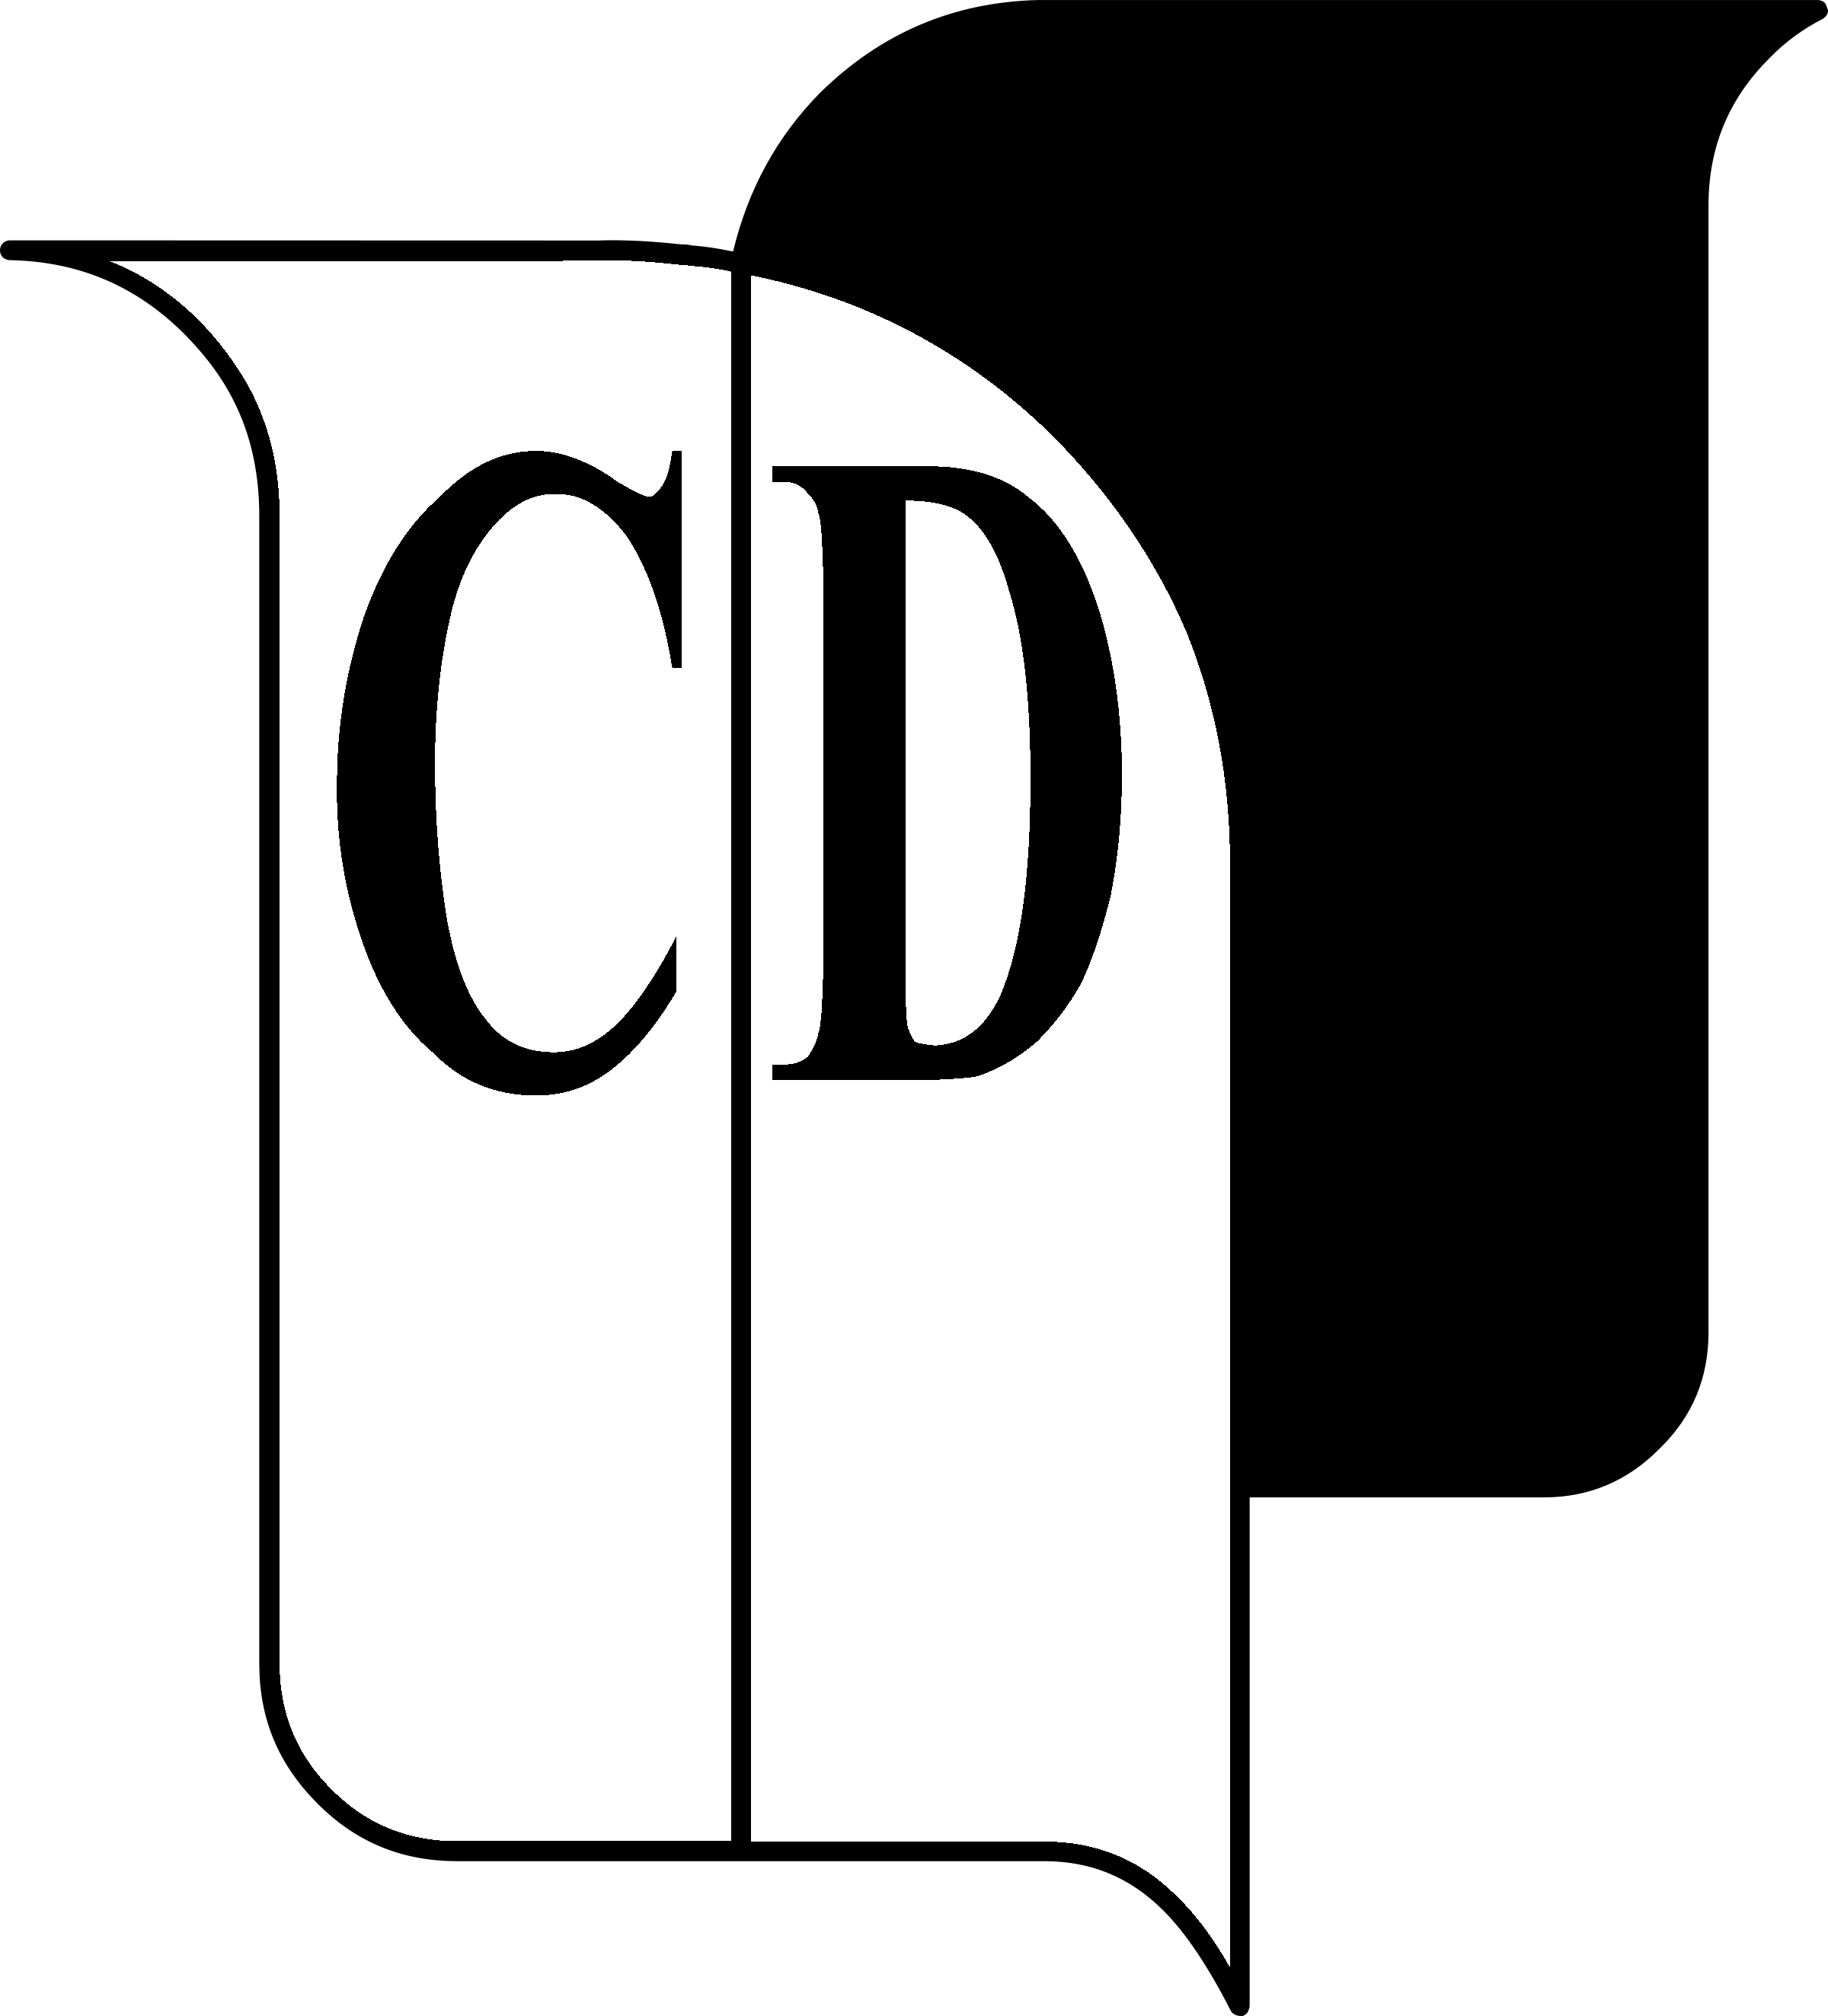 Cd Espanol Logo Black And White - Cd Espanol Logo Black And White (2400x2647)